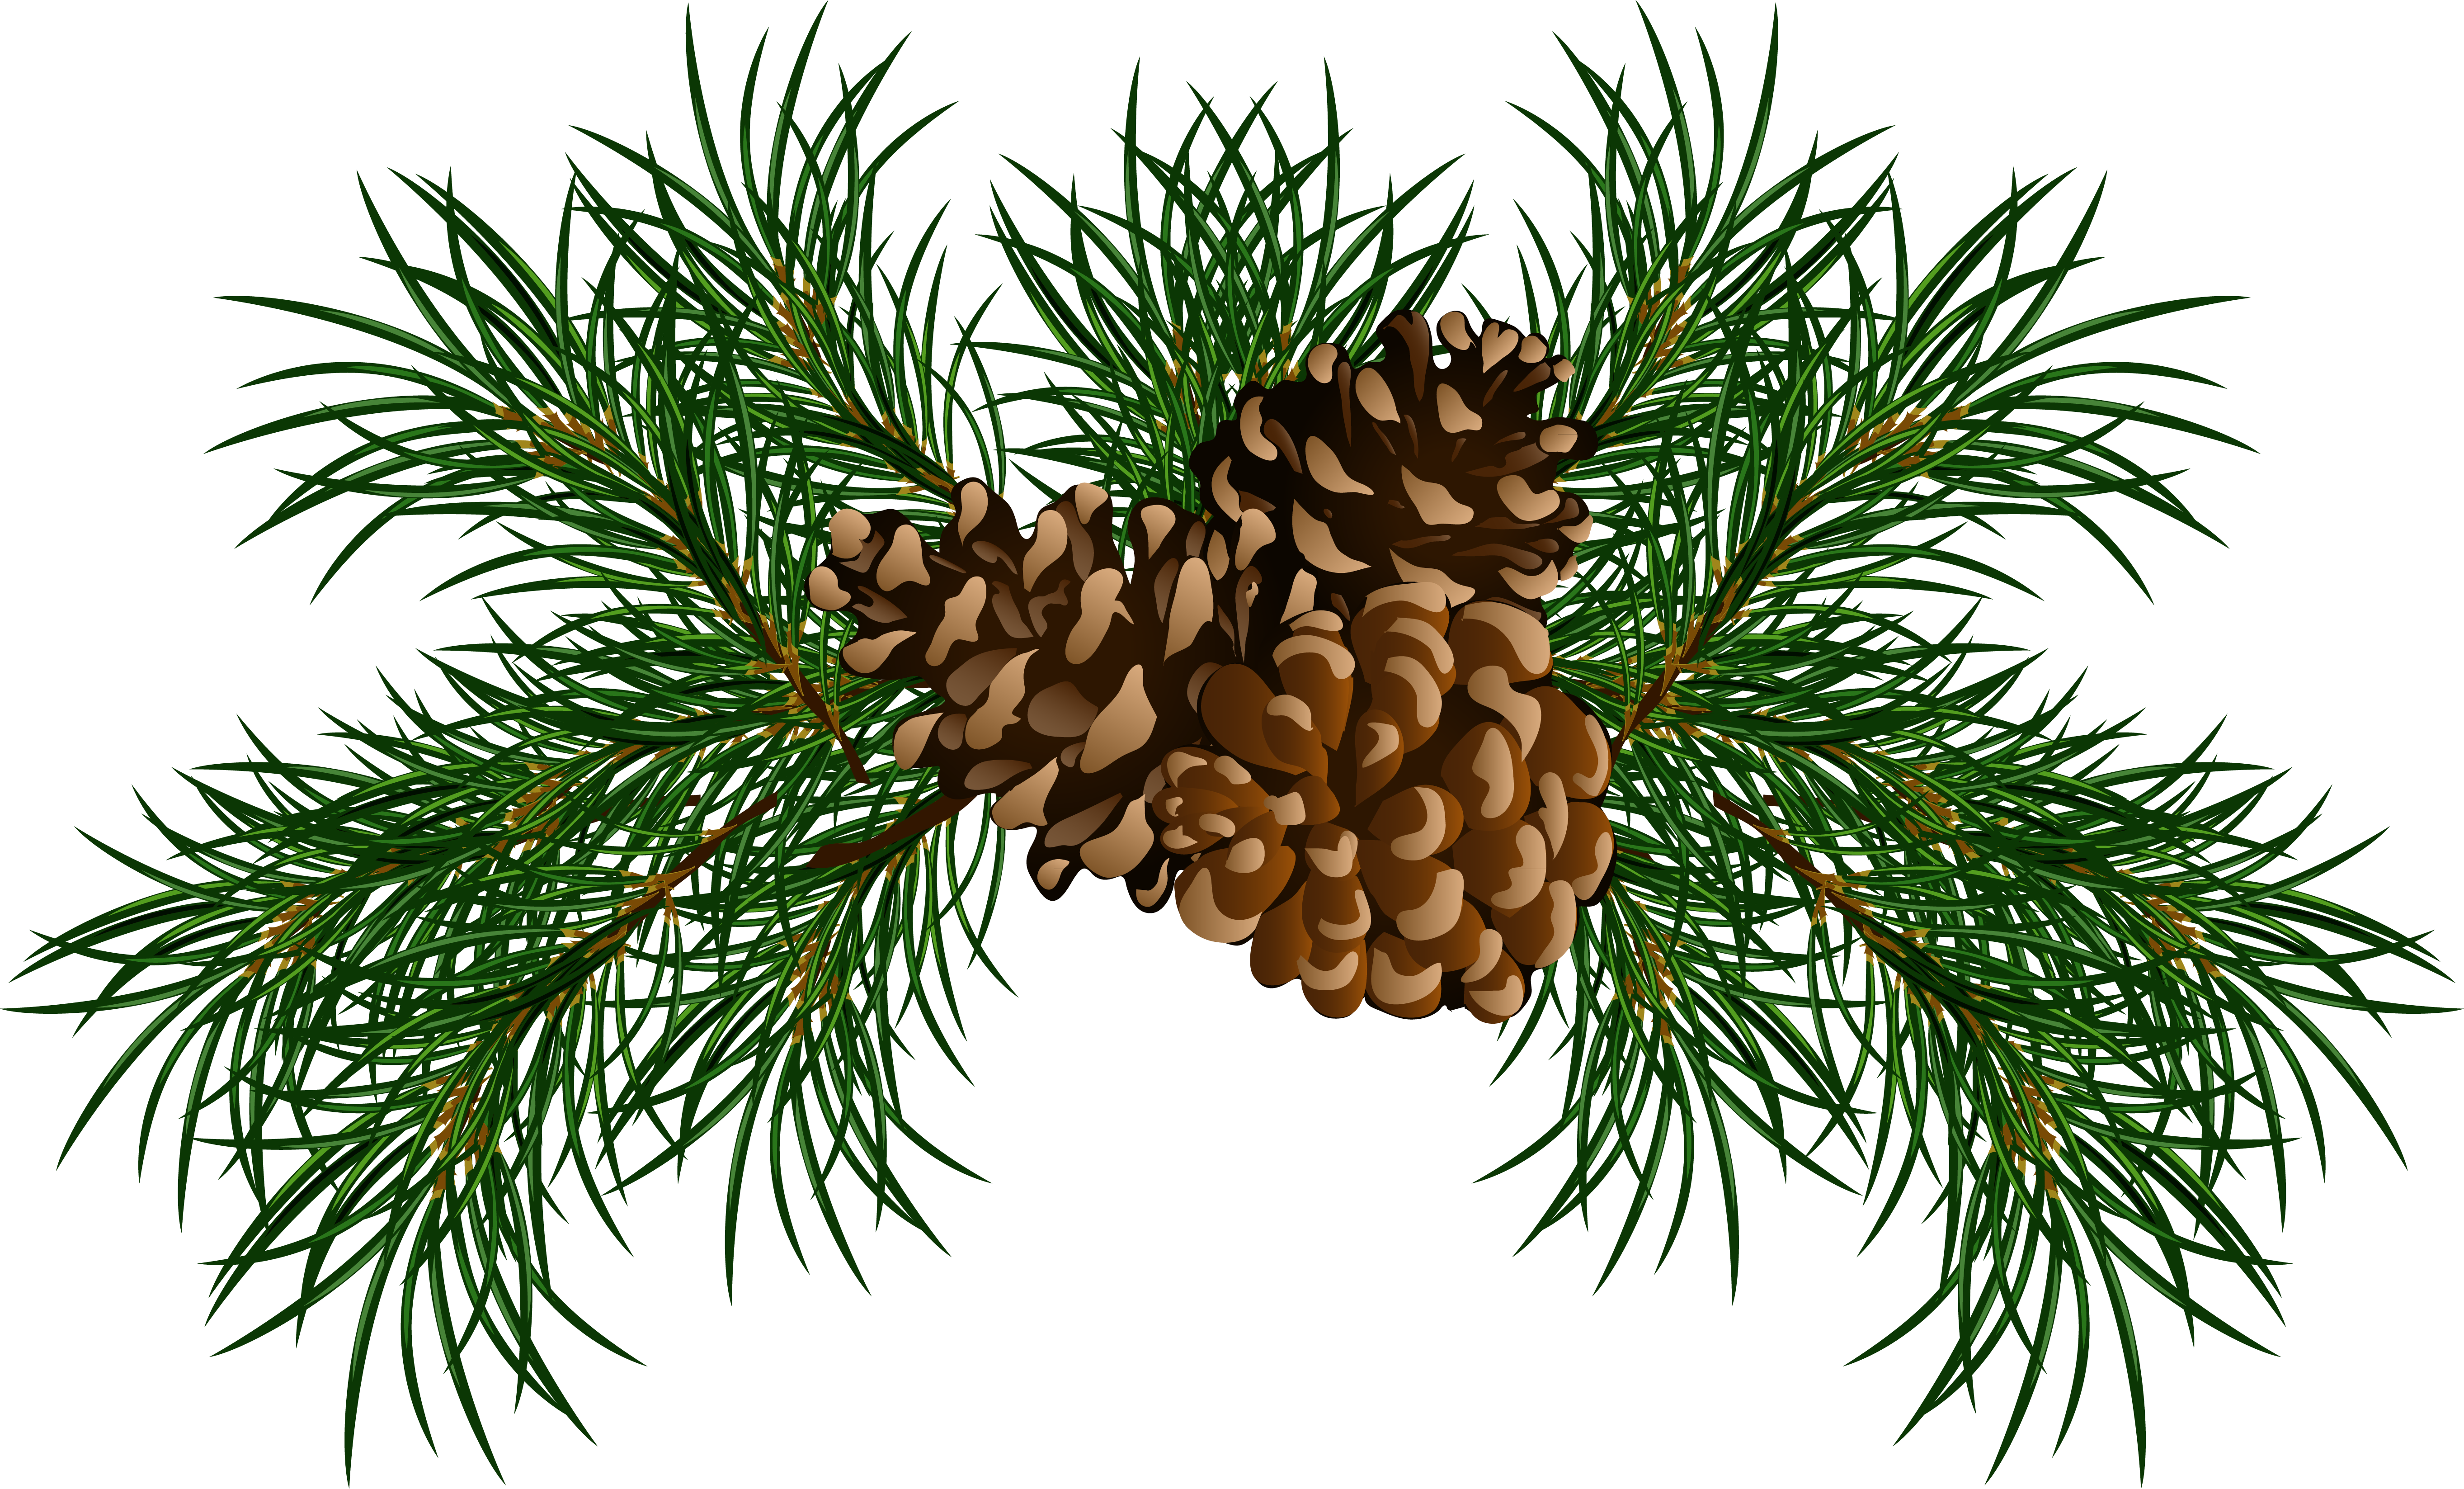 loblolly pine tree clip art